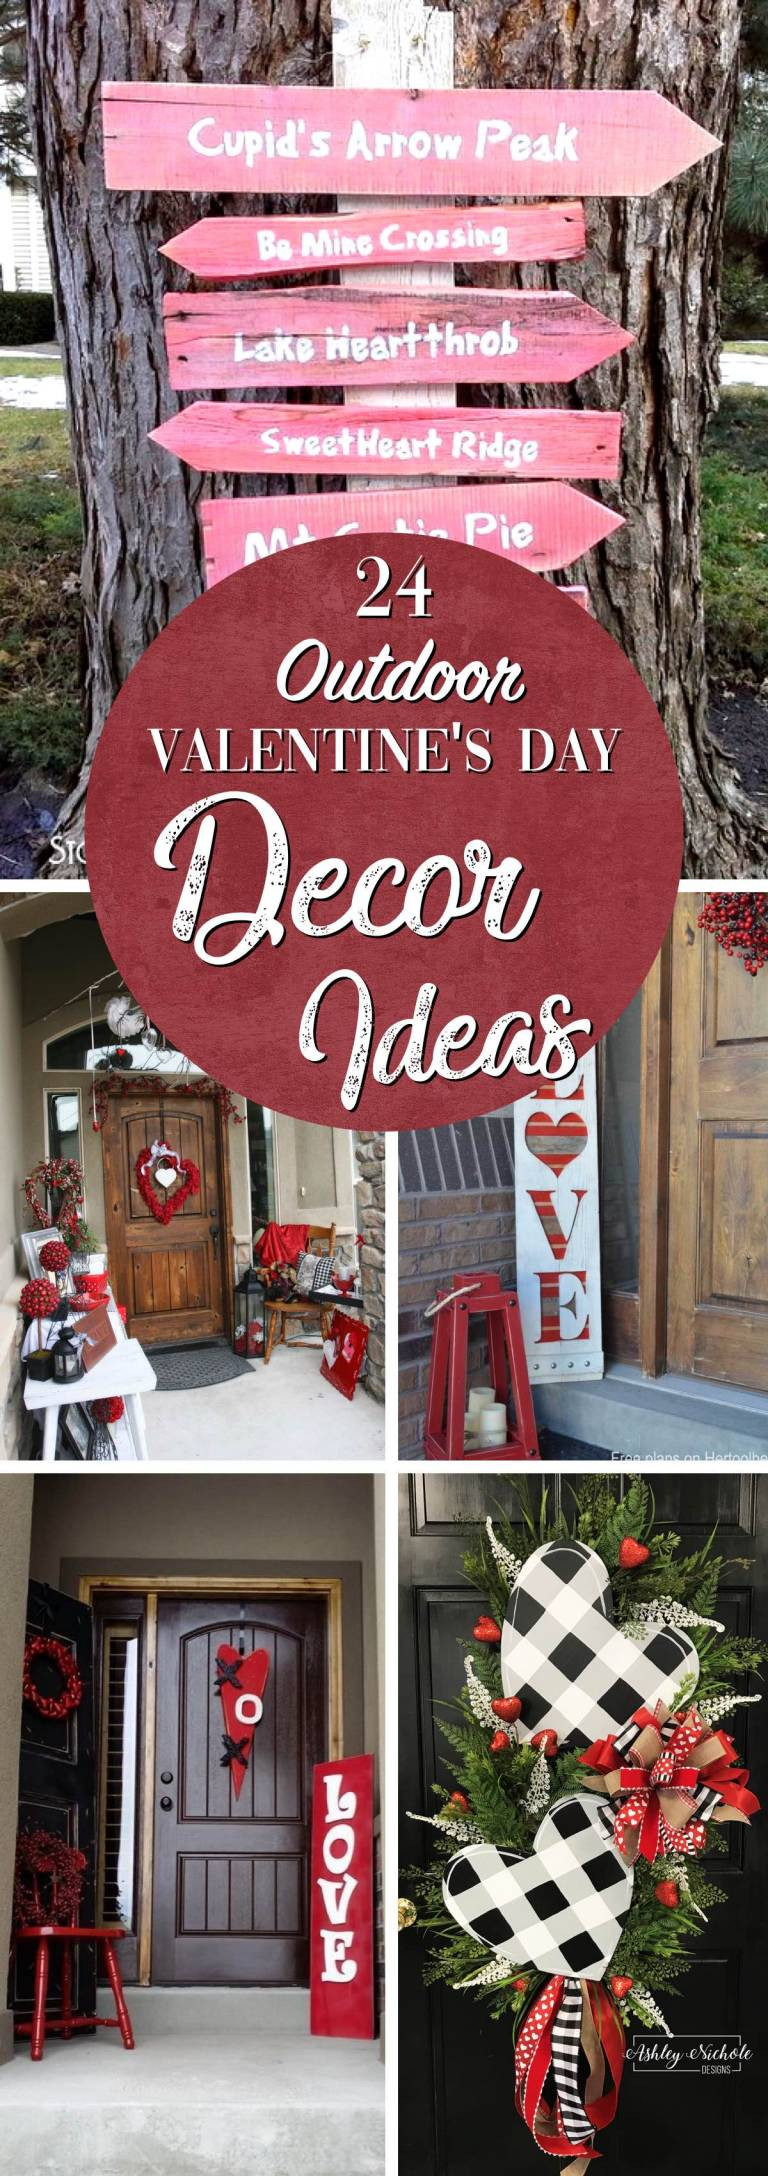 Valentines Day Date Ideas 2019
 Best 24 Outdoor Valentine s Day Decor Ideas for 2019